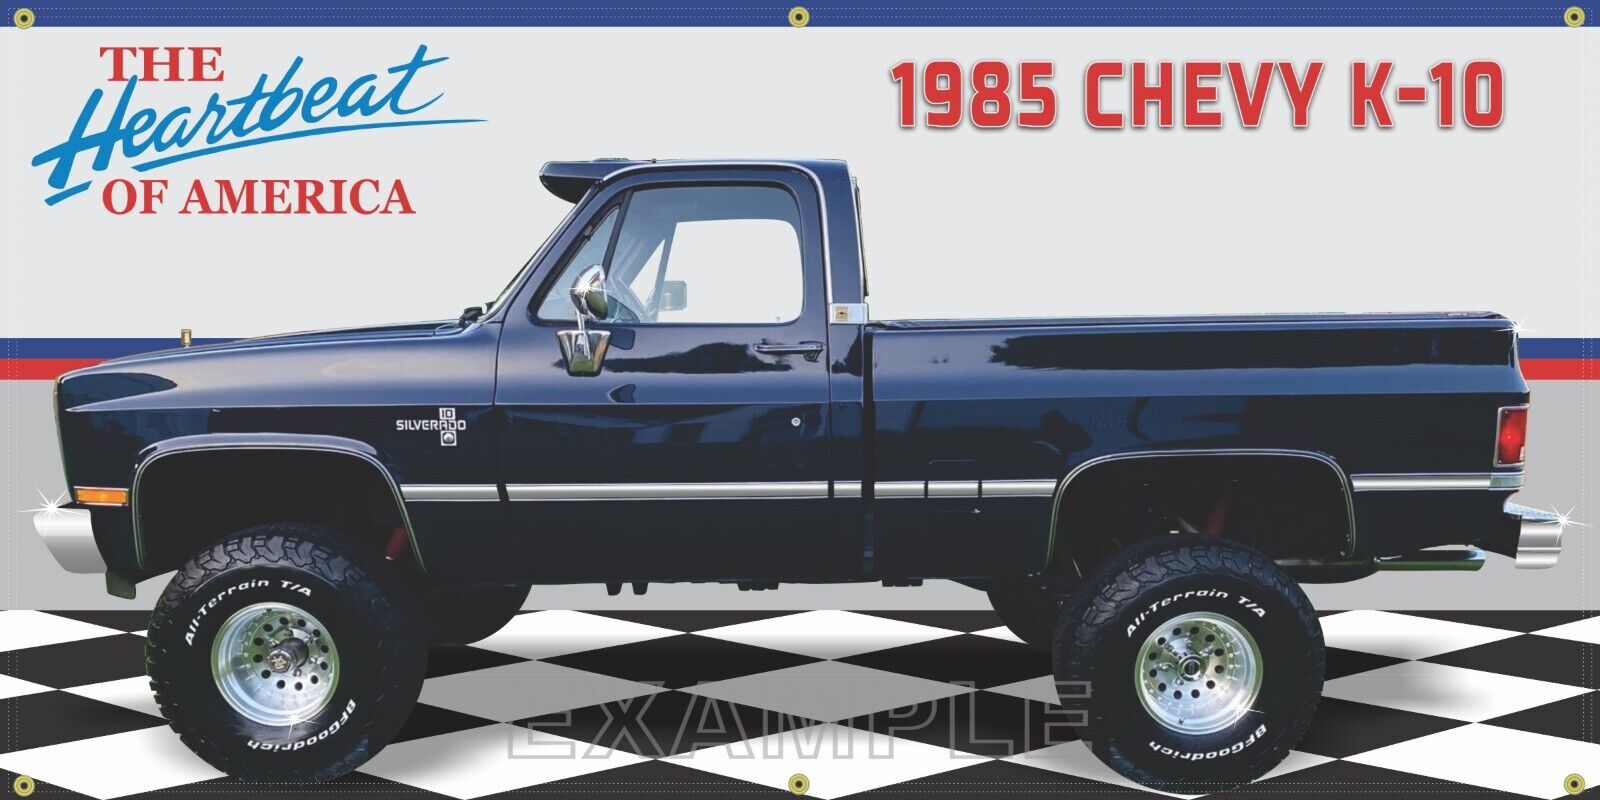 1985 CHEVY CHEVROLET K10 4 X 4 TRUCK DARK BLUE GARAGE SCENE BANNER SIGN MURAL